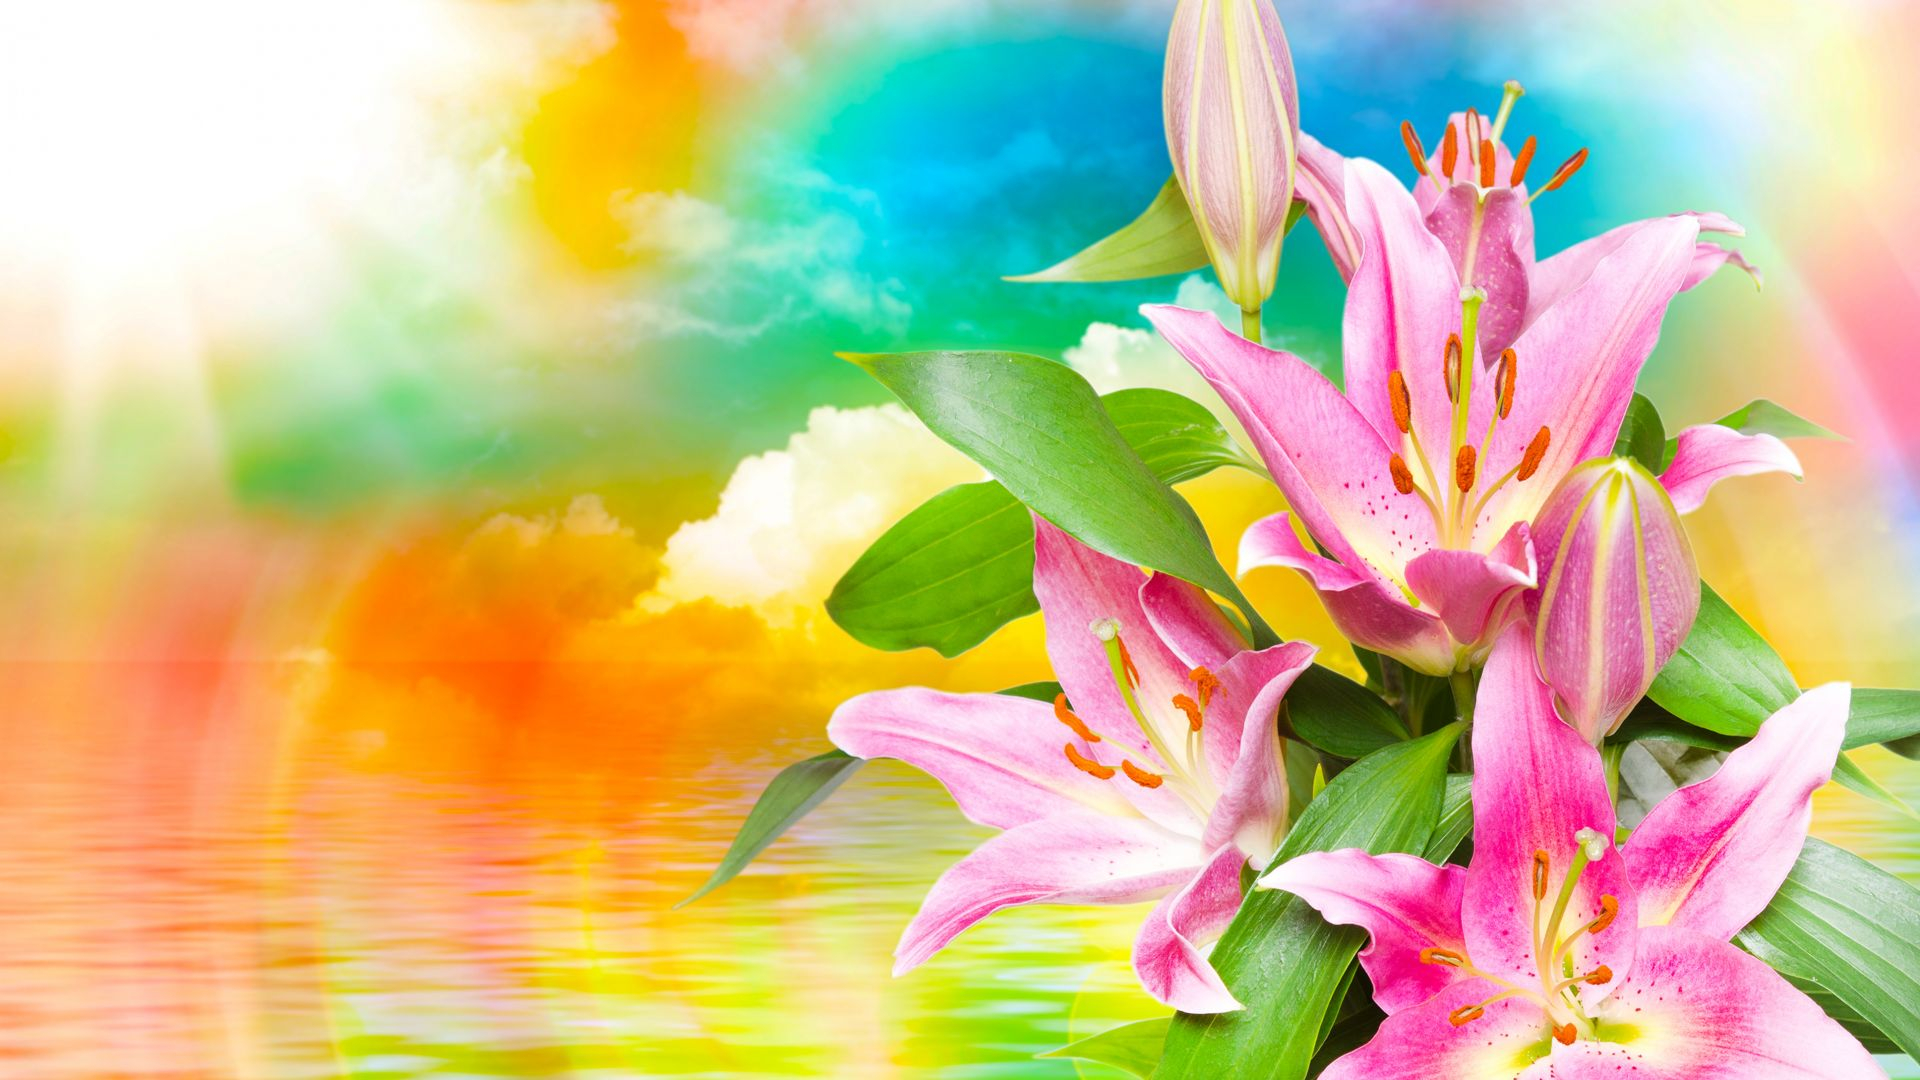 1920x1080 Desktop Wallpaper Pink Lily Flower, Artwork, Hd Image, Picture, Background, K3kczi